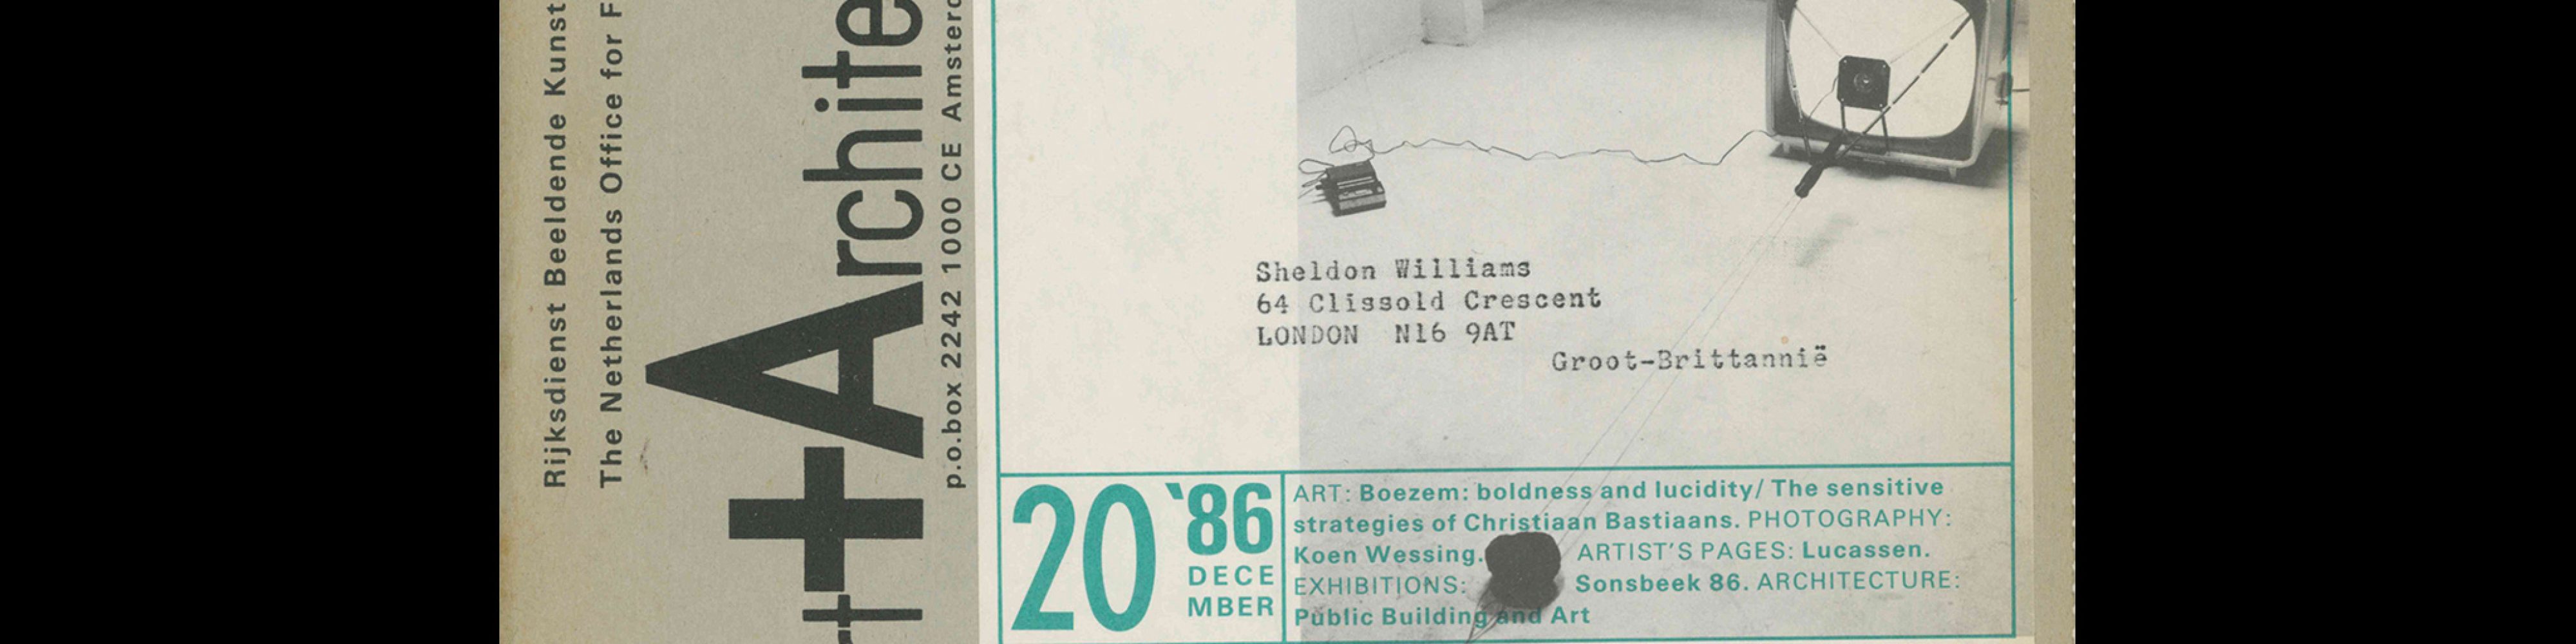 Dutch Art + Architecture Today 20, 1986. Designed by Jan van Toorn